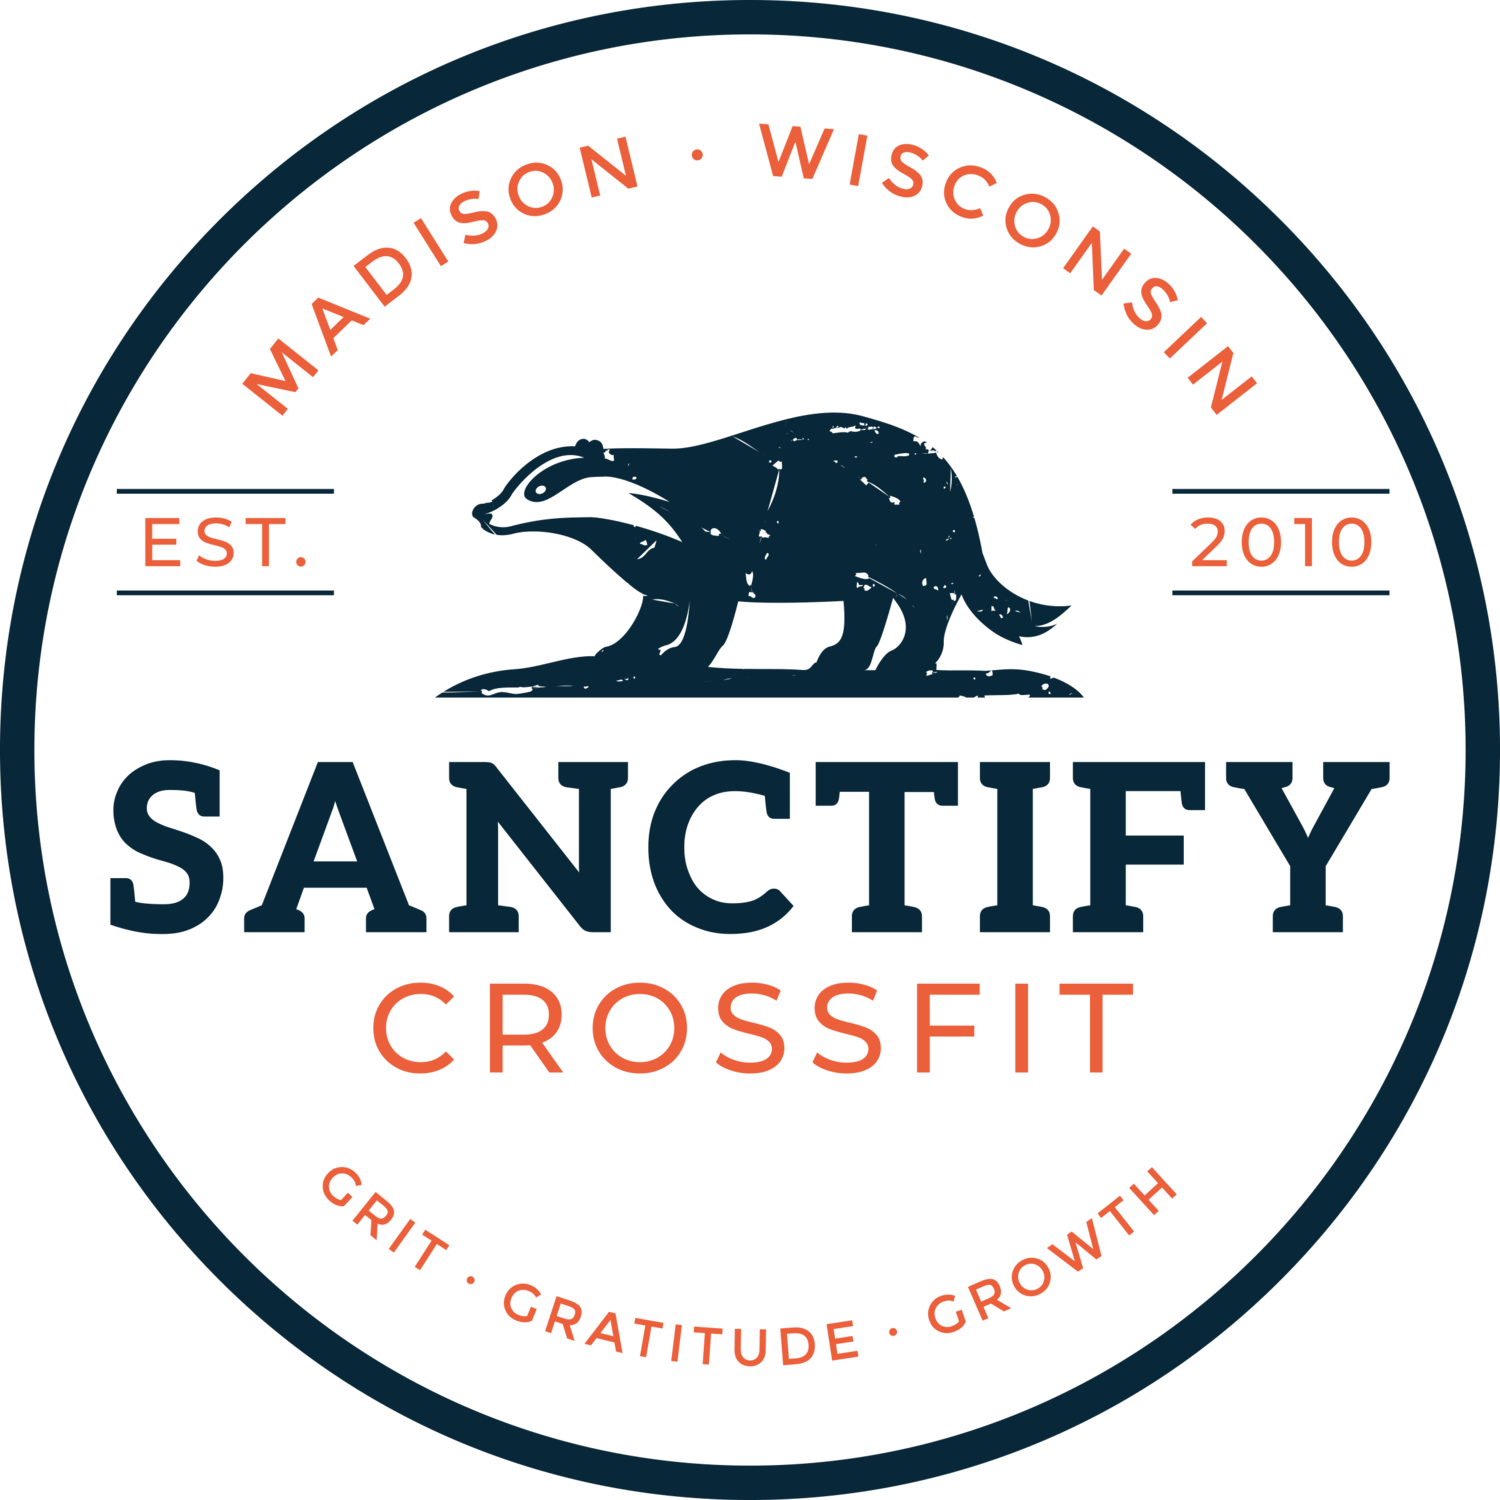 CrossFit Sanctify 